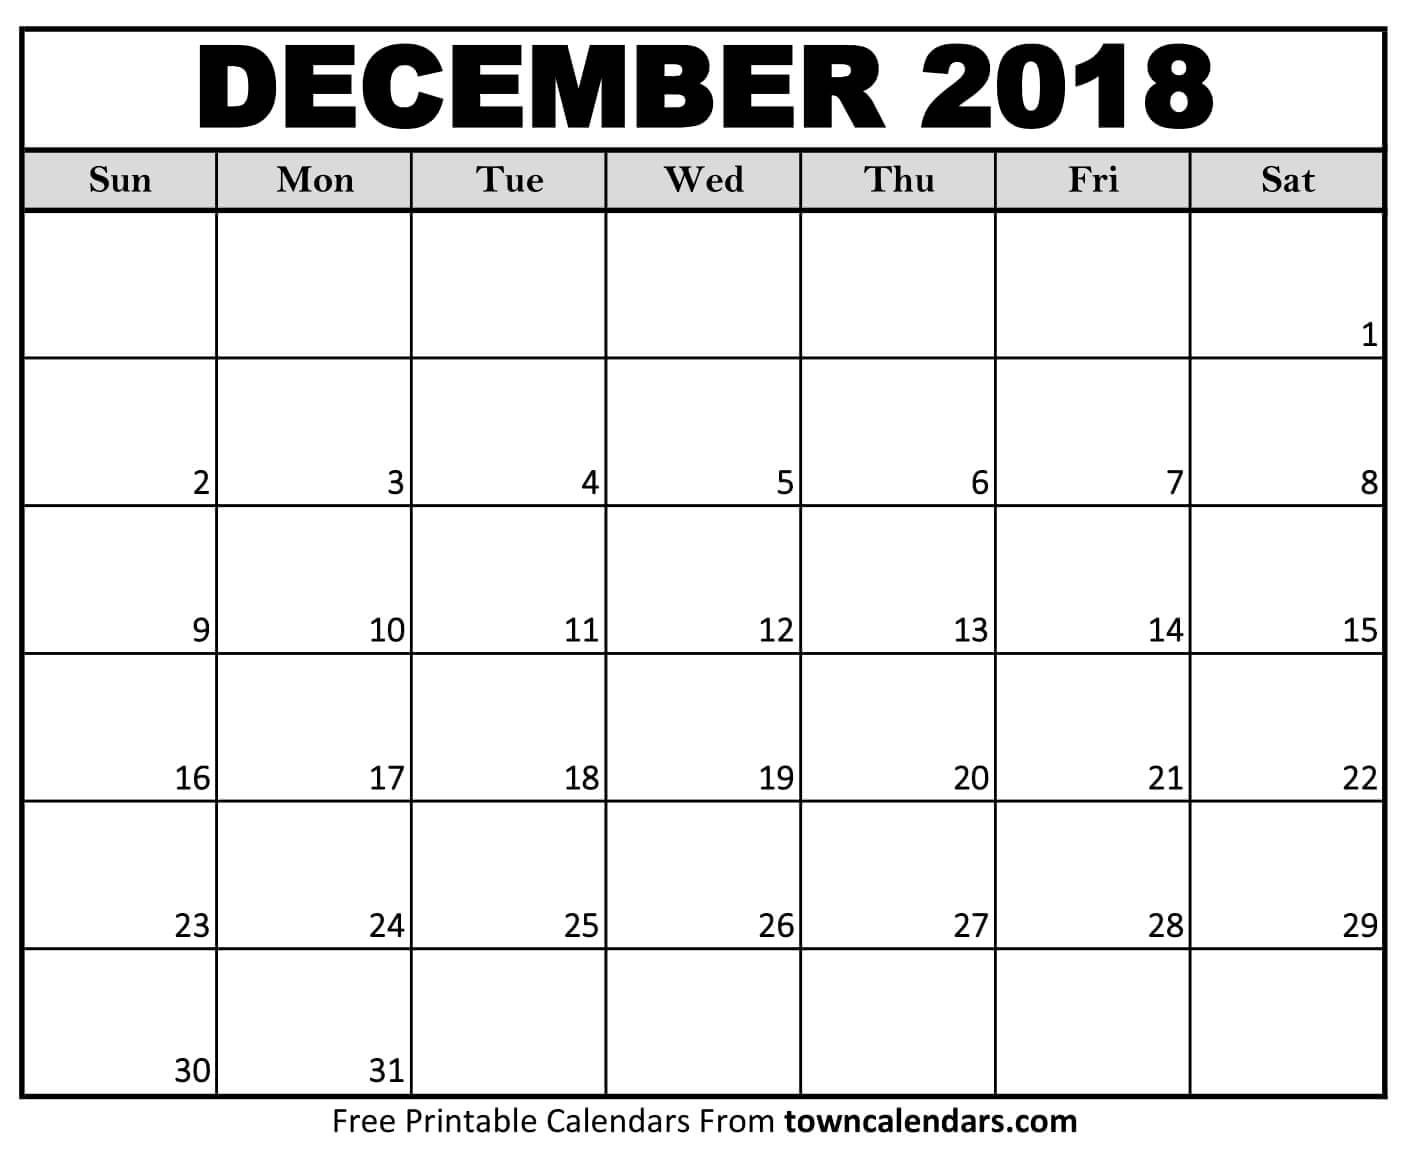 Printable December 2018 Calendar towncalendars